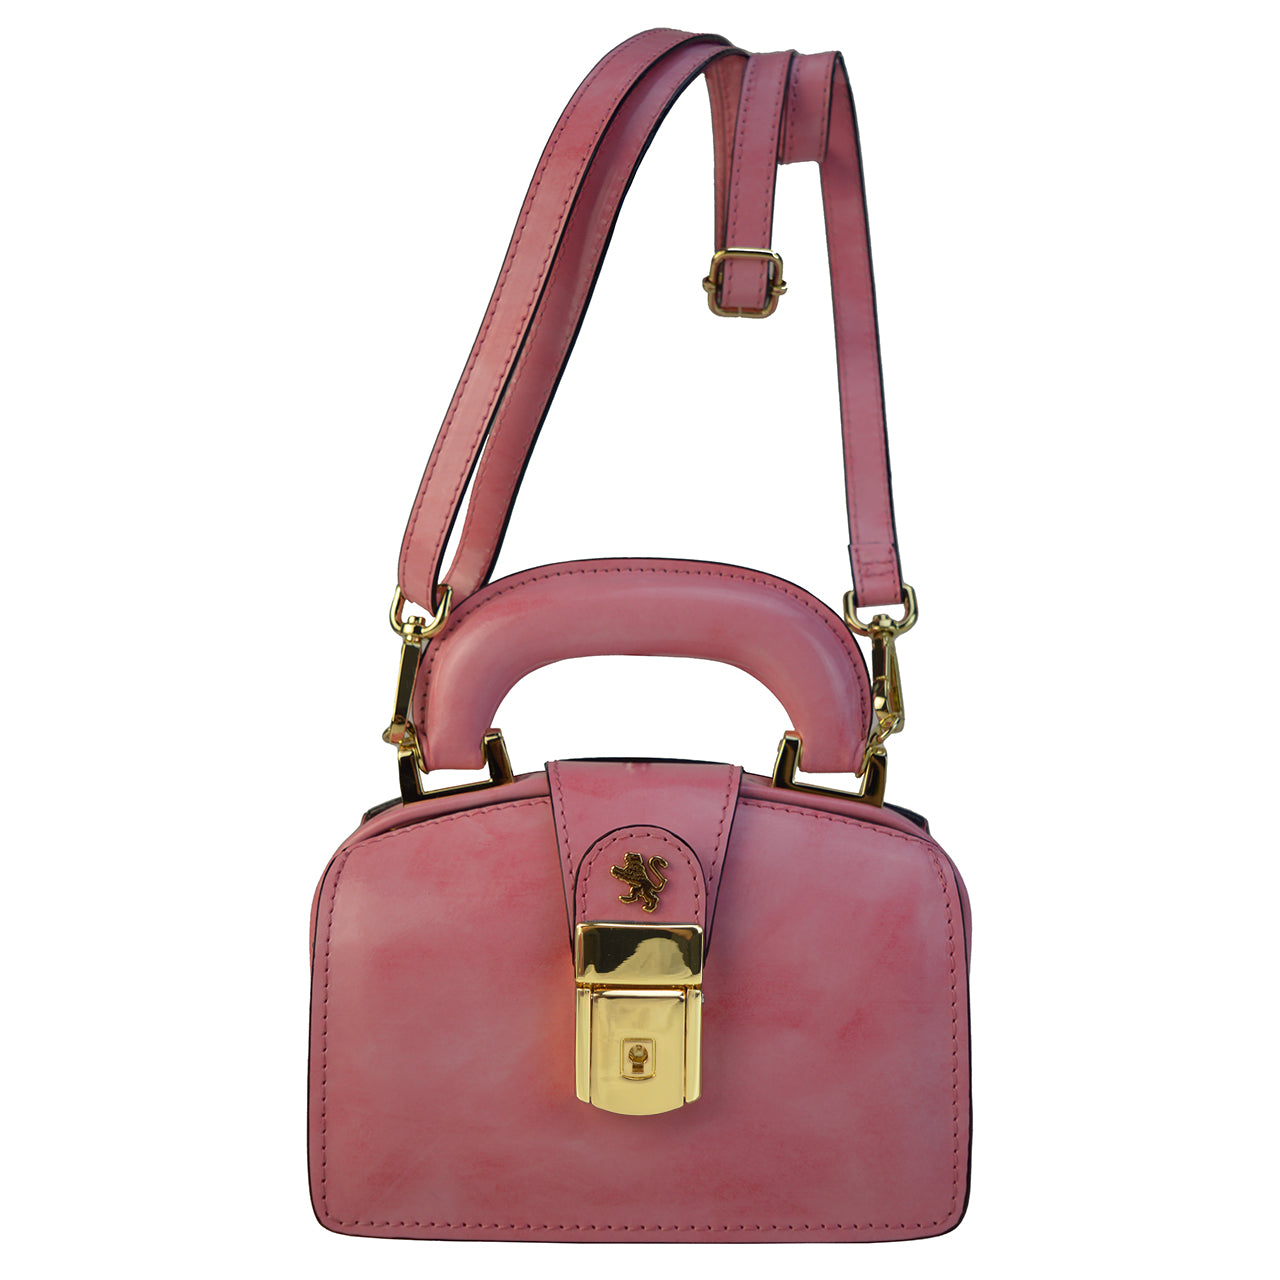 Pratesi Lady 18 Brunelleschi in genuine Italian leather - Brunelleschi Leather Pink